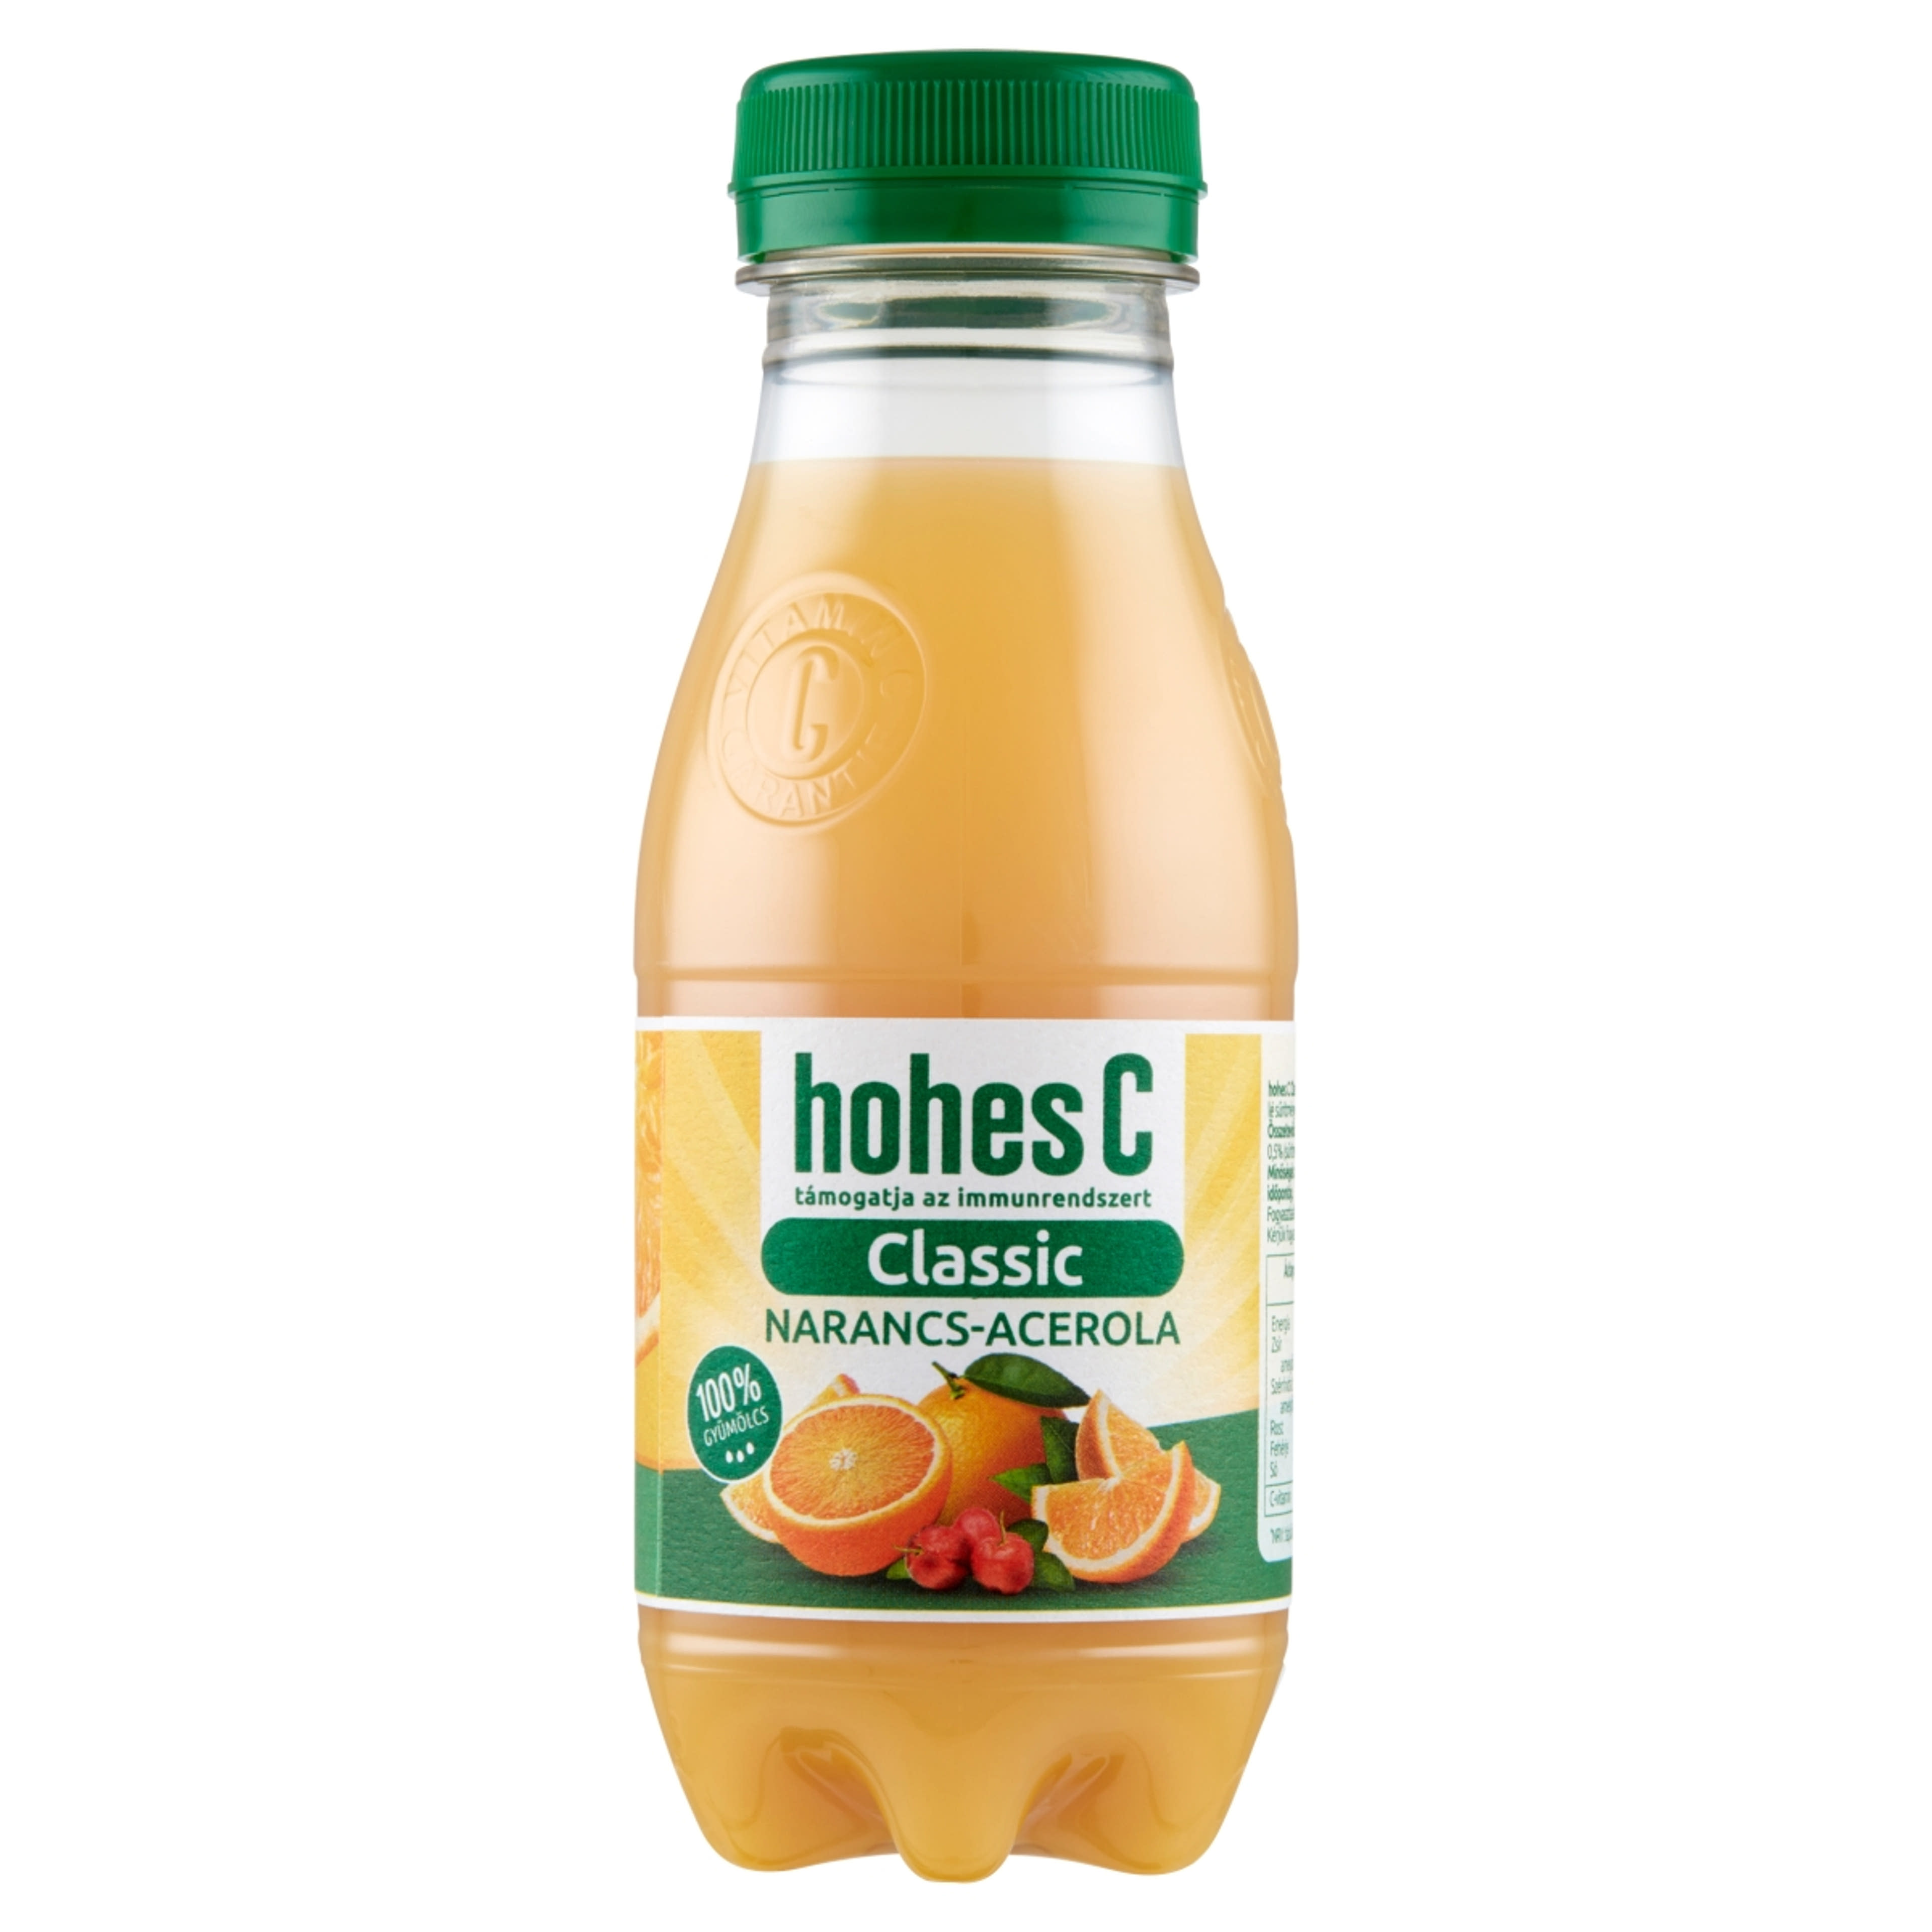 Hohes C narancs - acerola 100% - 250 ml-1